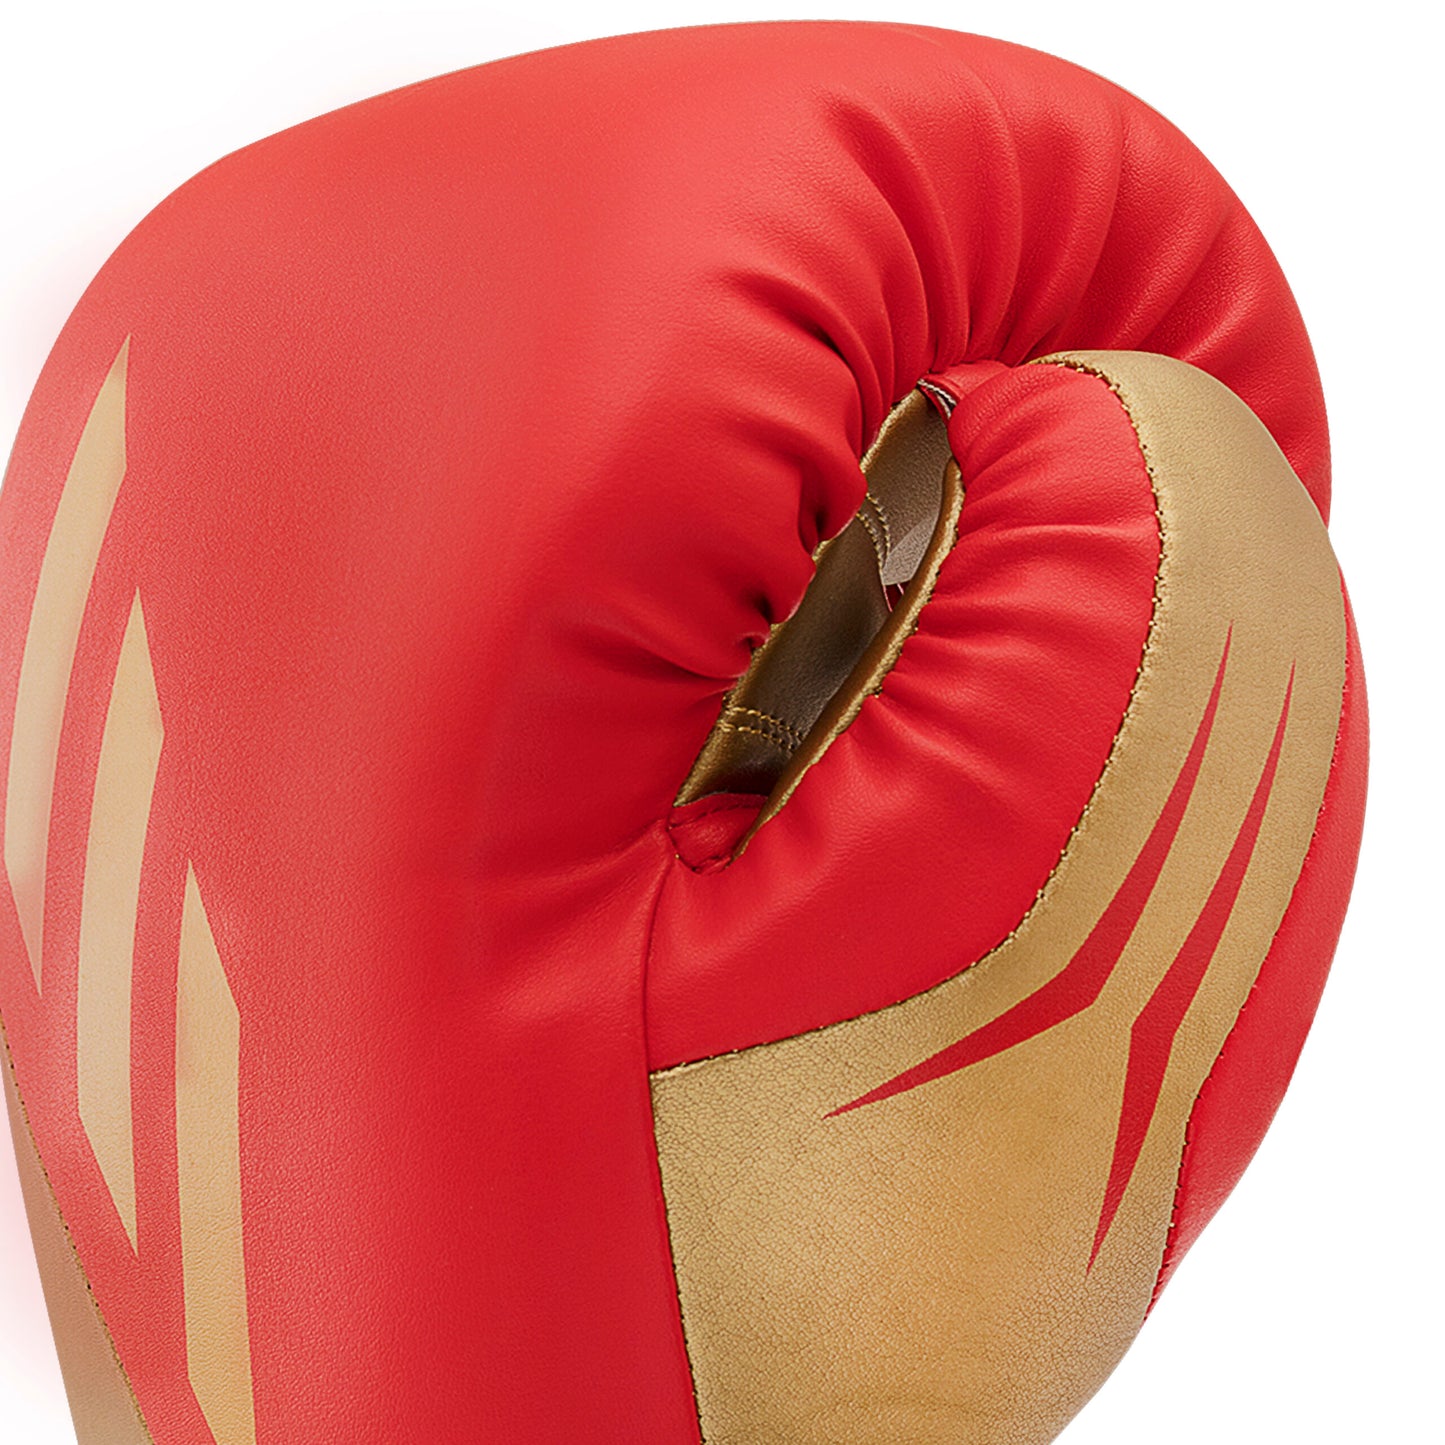 Adispd350tg Adidas Tilt 350 Pro Training Boxing Gloves Velcro Strap Red Gold 10